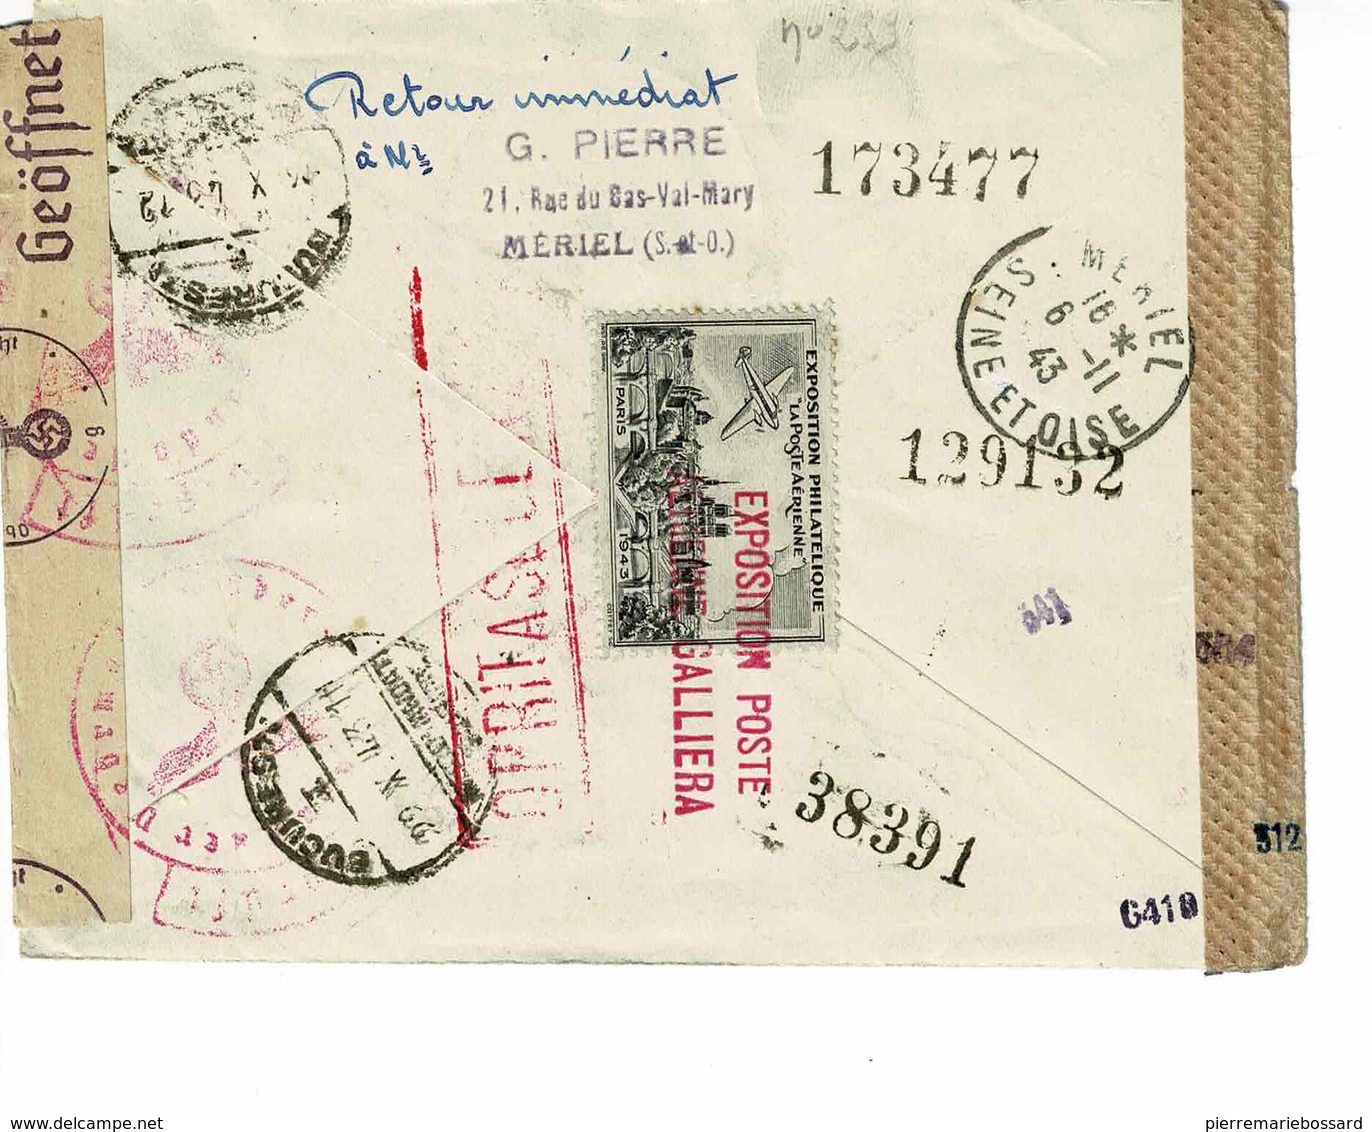 AVIATION , EXPO AERIENNE GALLERIA PHIL OCTOBRE 1943, FRANCE-BUCAREST , R255 CACHET 34, CENSURE ALLEMANDE - Lettres & Documents